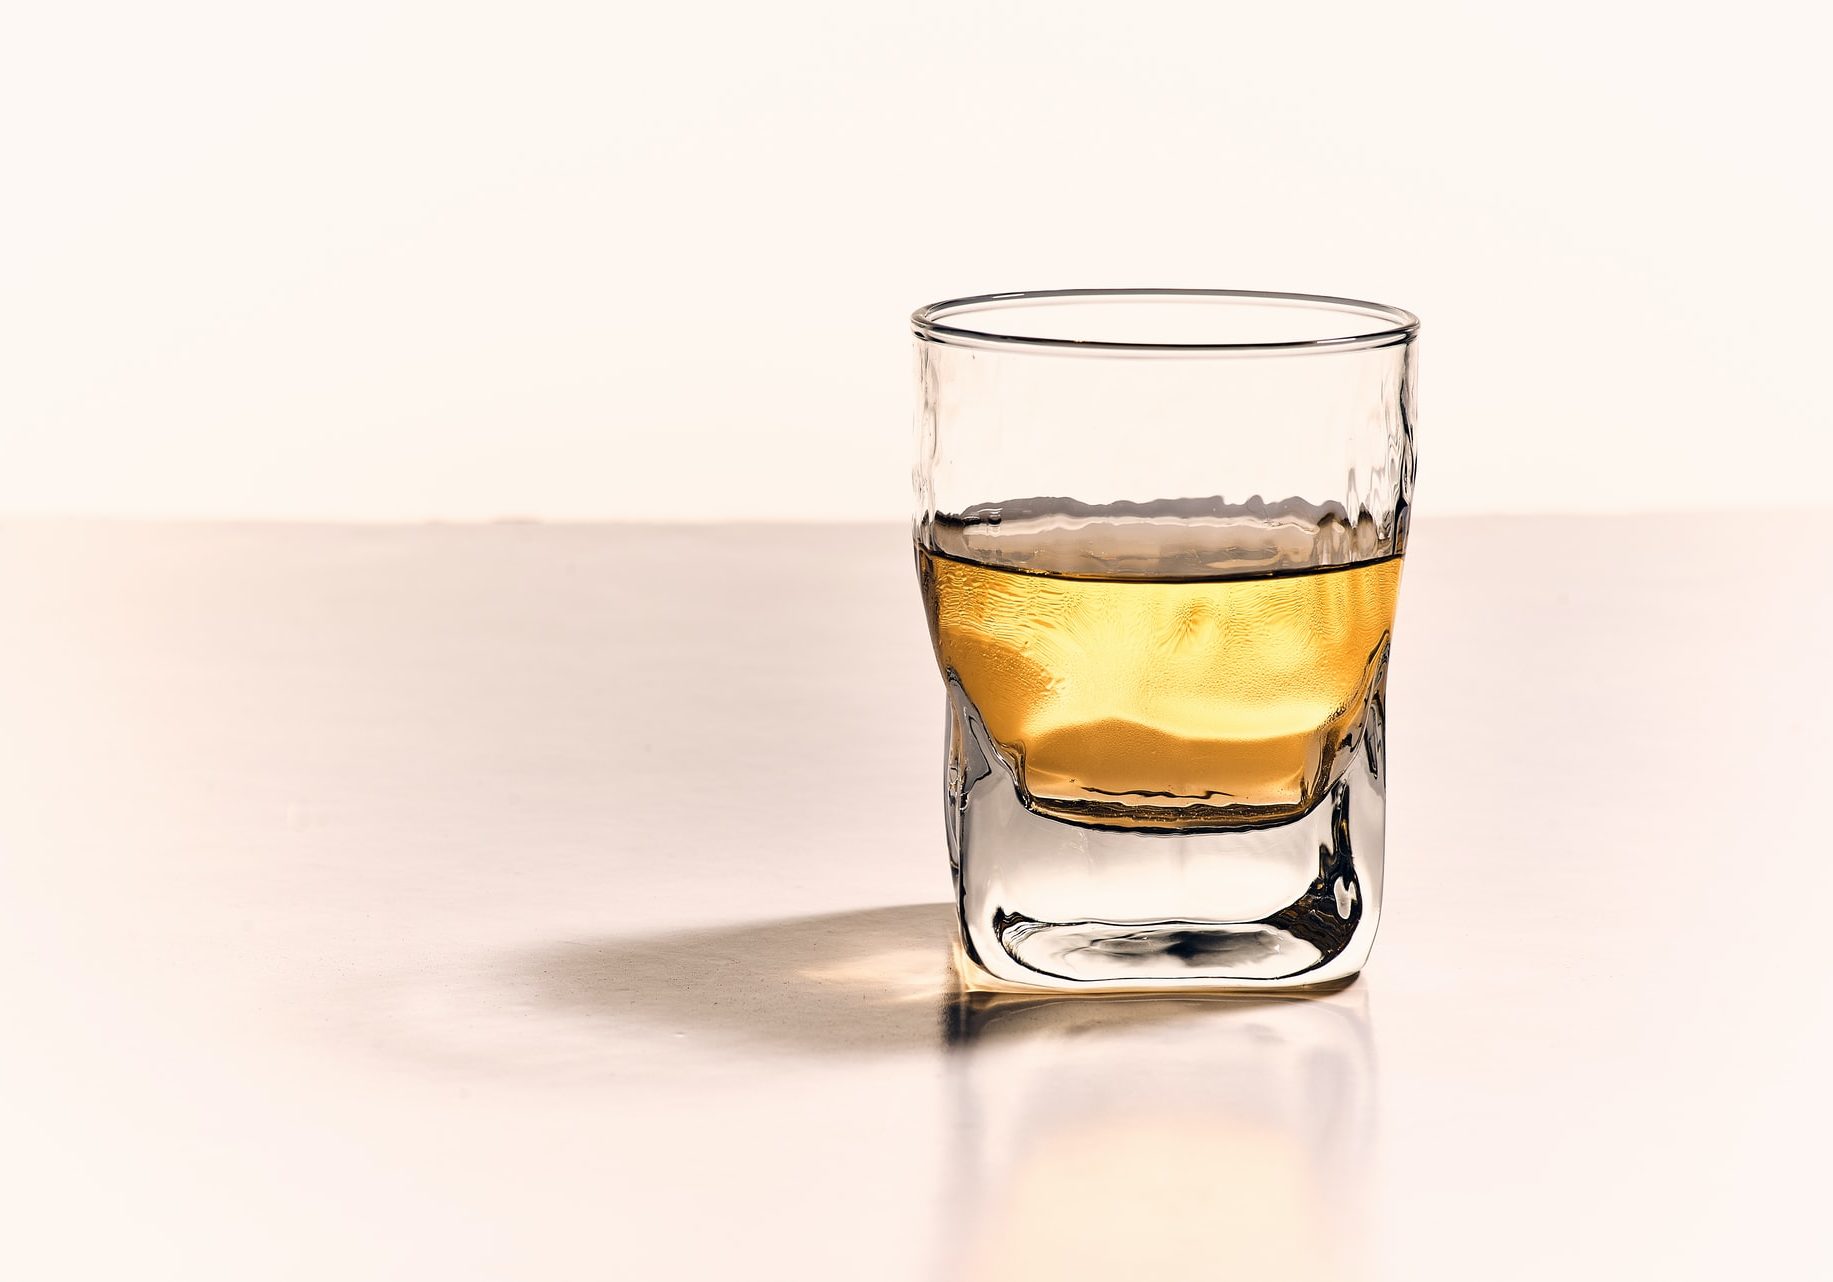 Greek alcoholic drink in glass